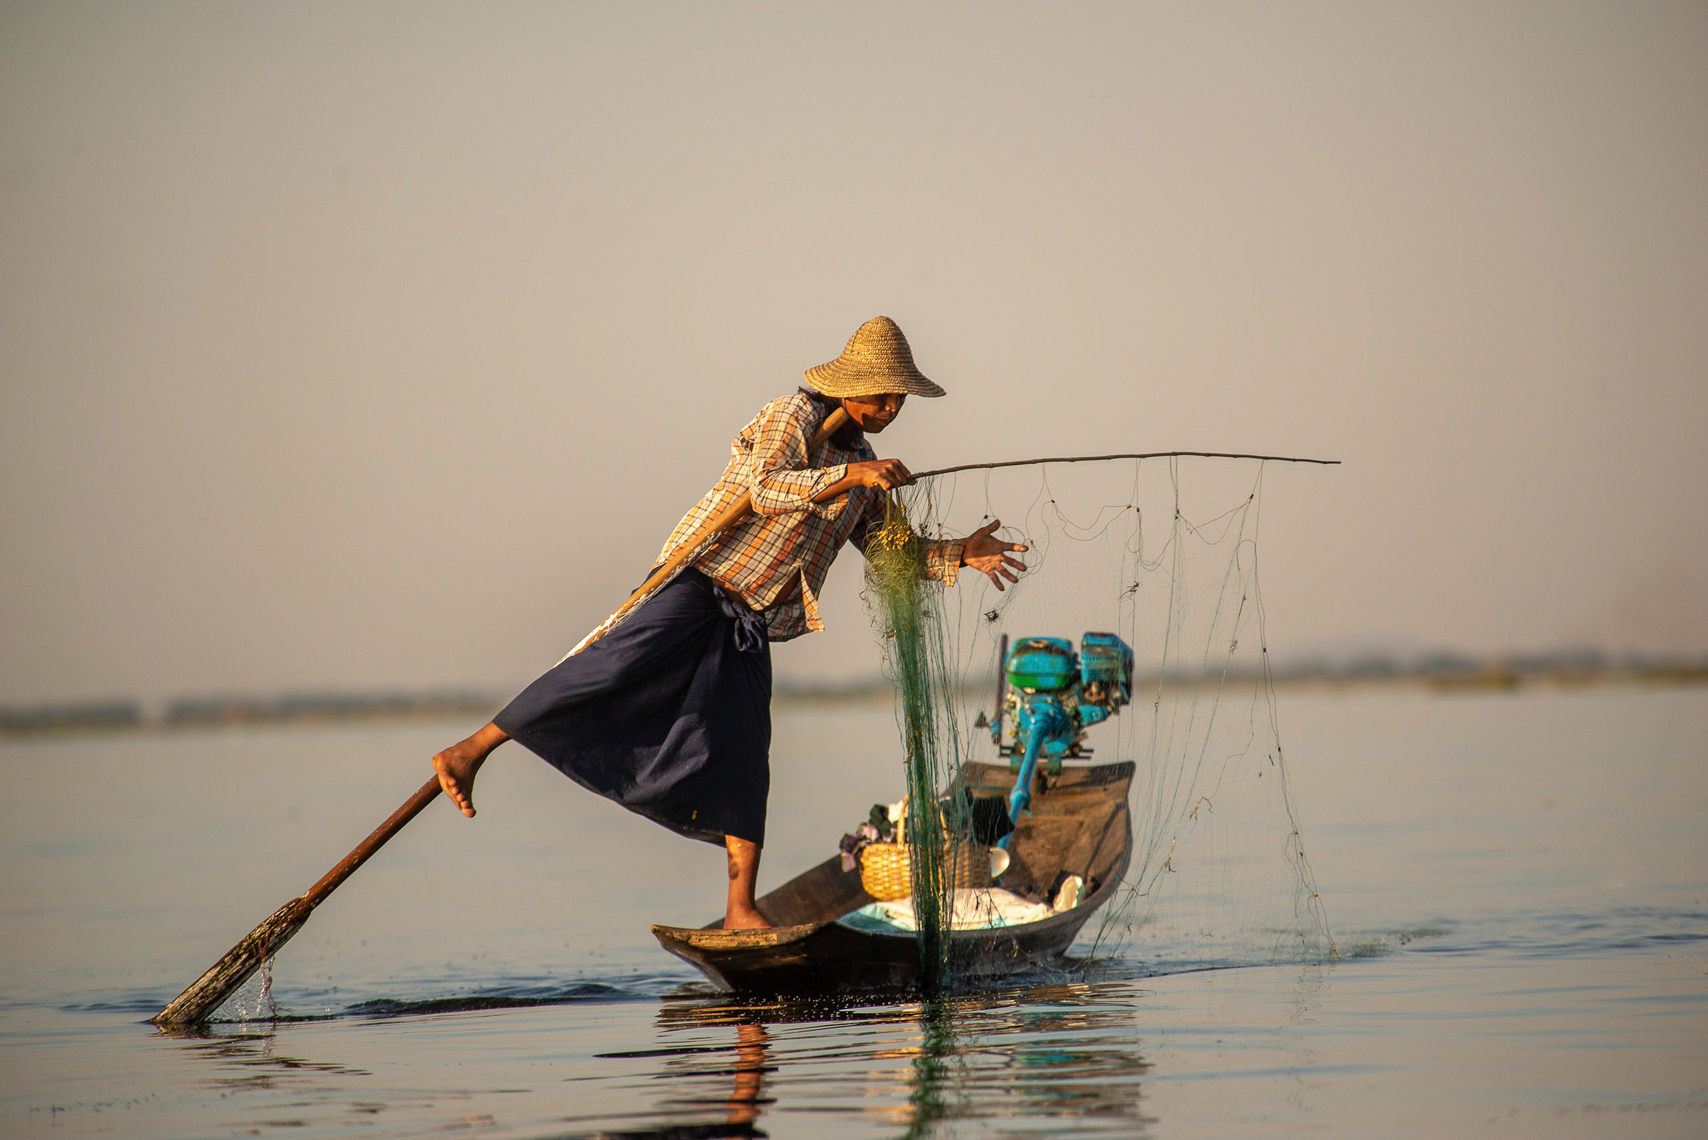 One Leg Rower-Inlay Lake, Myanmar